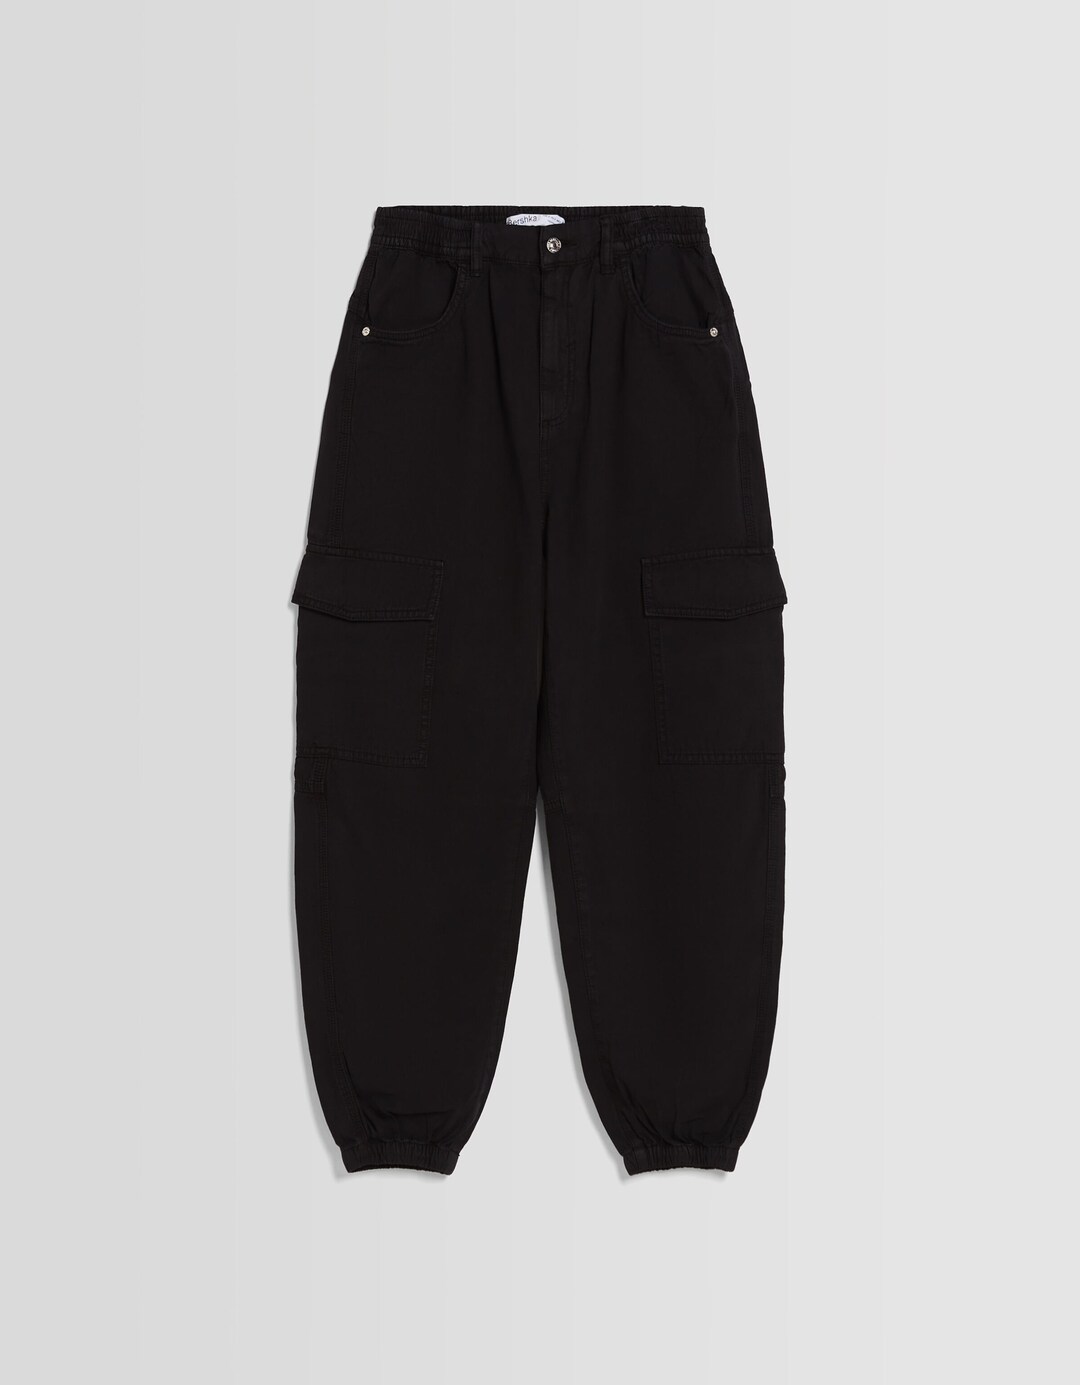 Pantalon jogger coton taille froncée poches